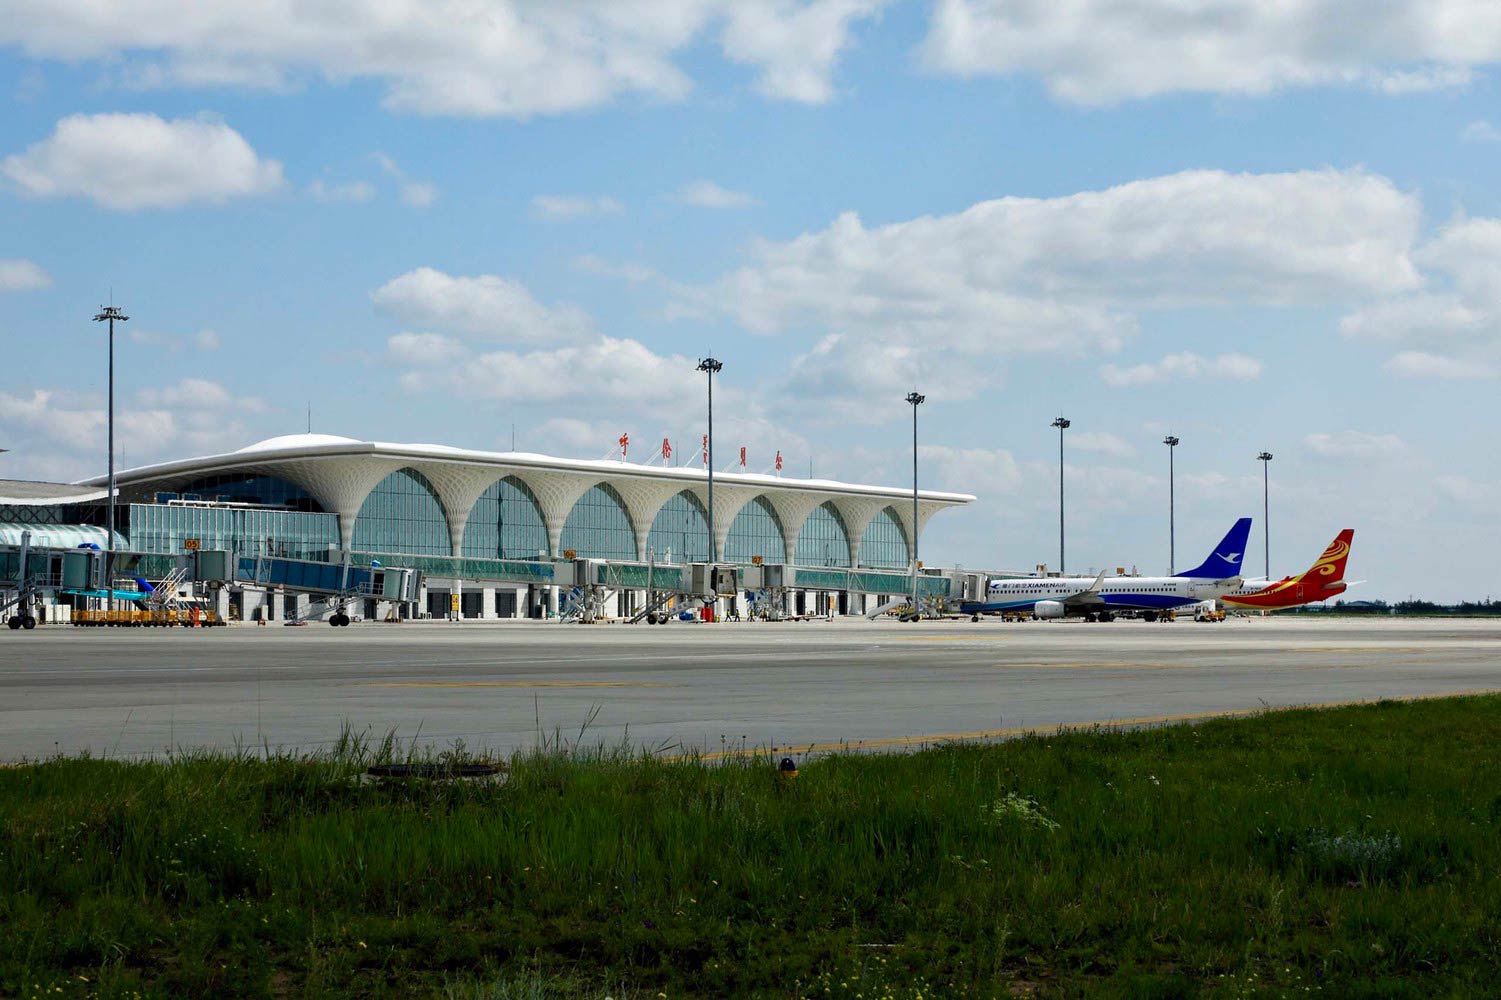 Hulunbuir Hailar Airport